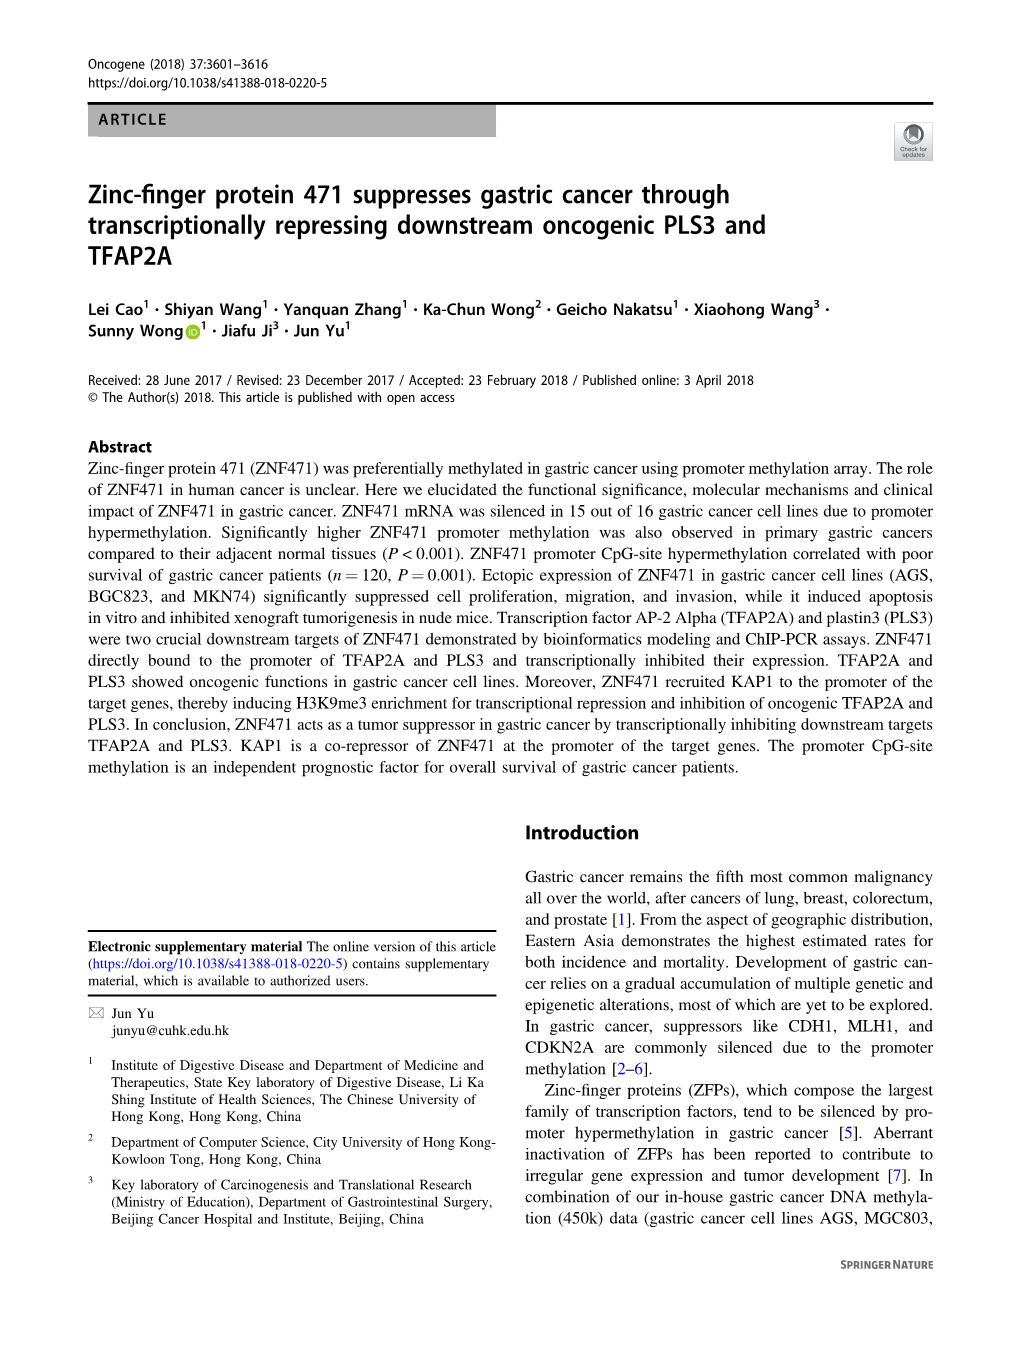 Zinc-Finger Protein 471 Suppresses Gastric Cancer Through